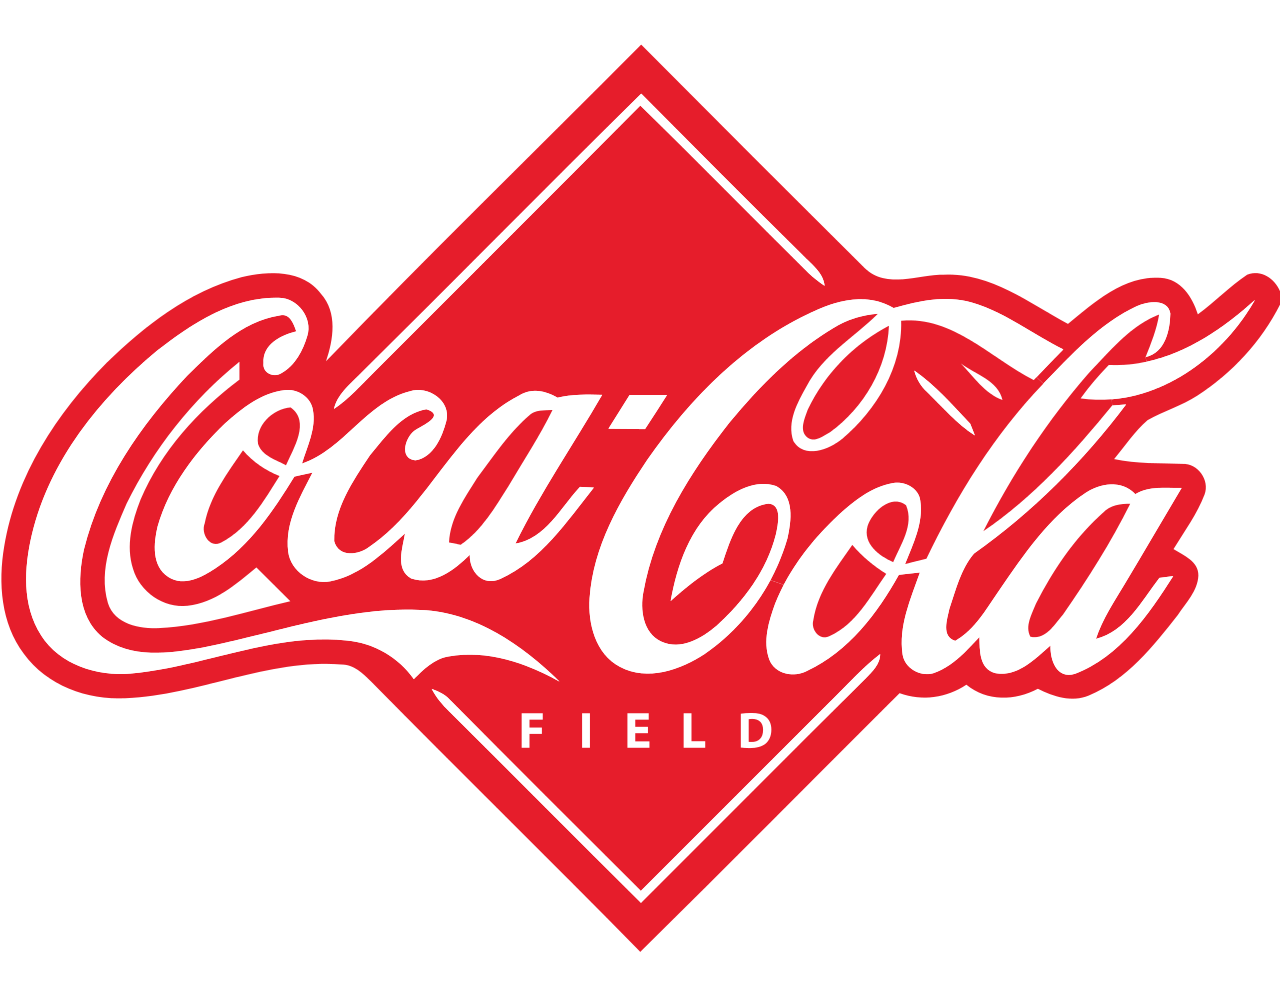 coca cola fıeld logo png images #4633